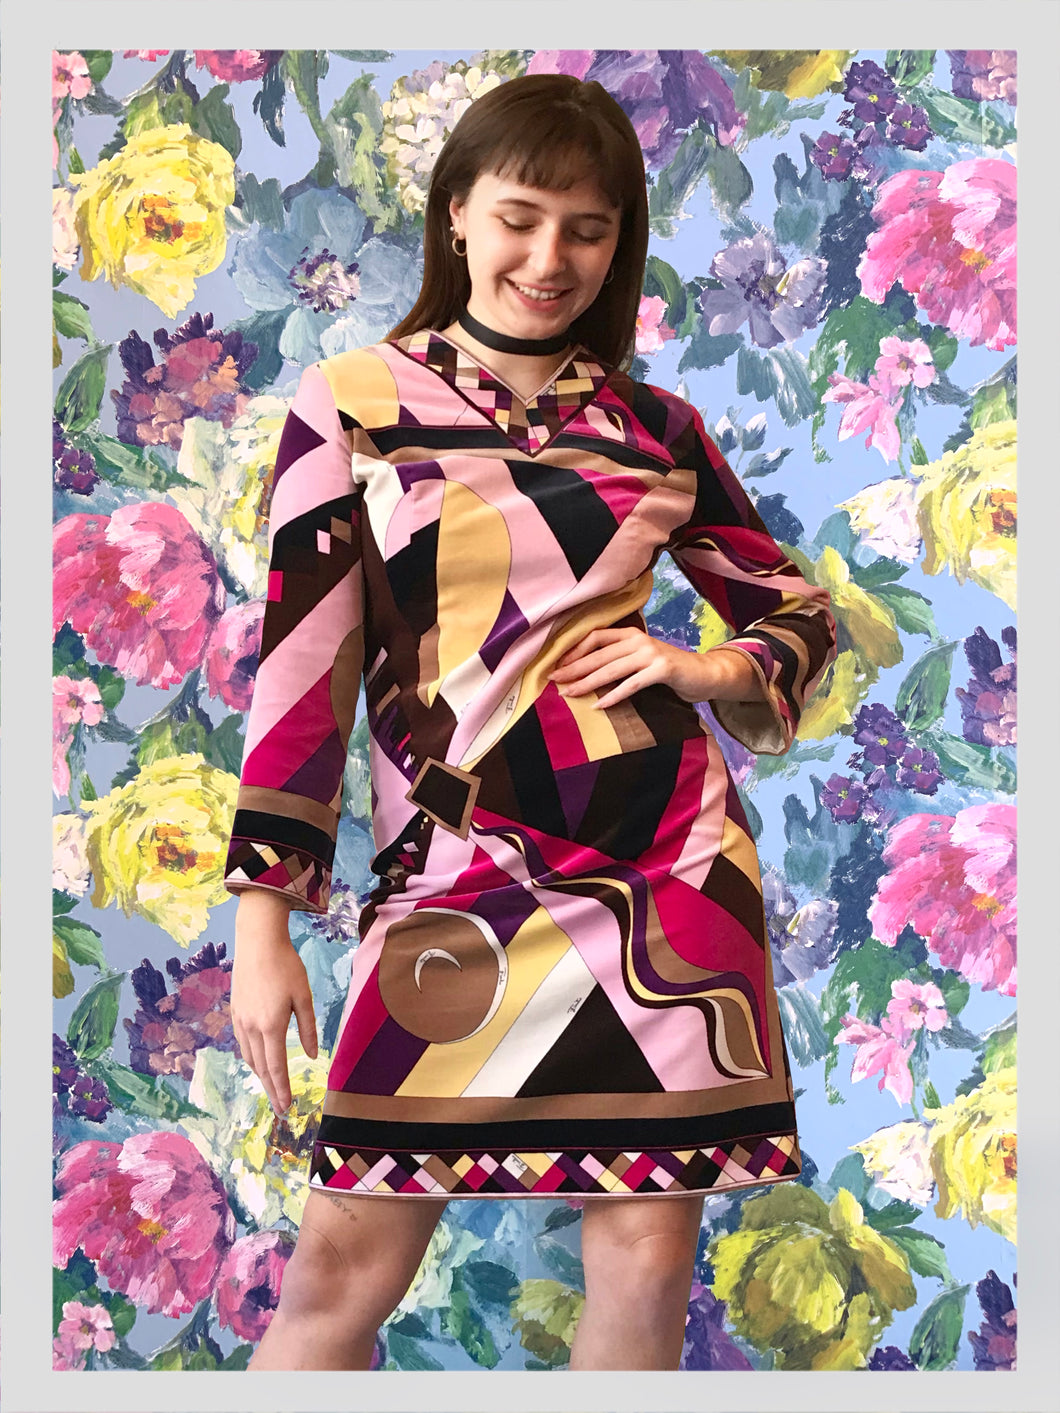 Pucci Kaleidoscope Velvet Dress from Dress, in Bridport